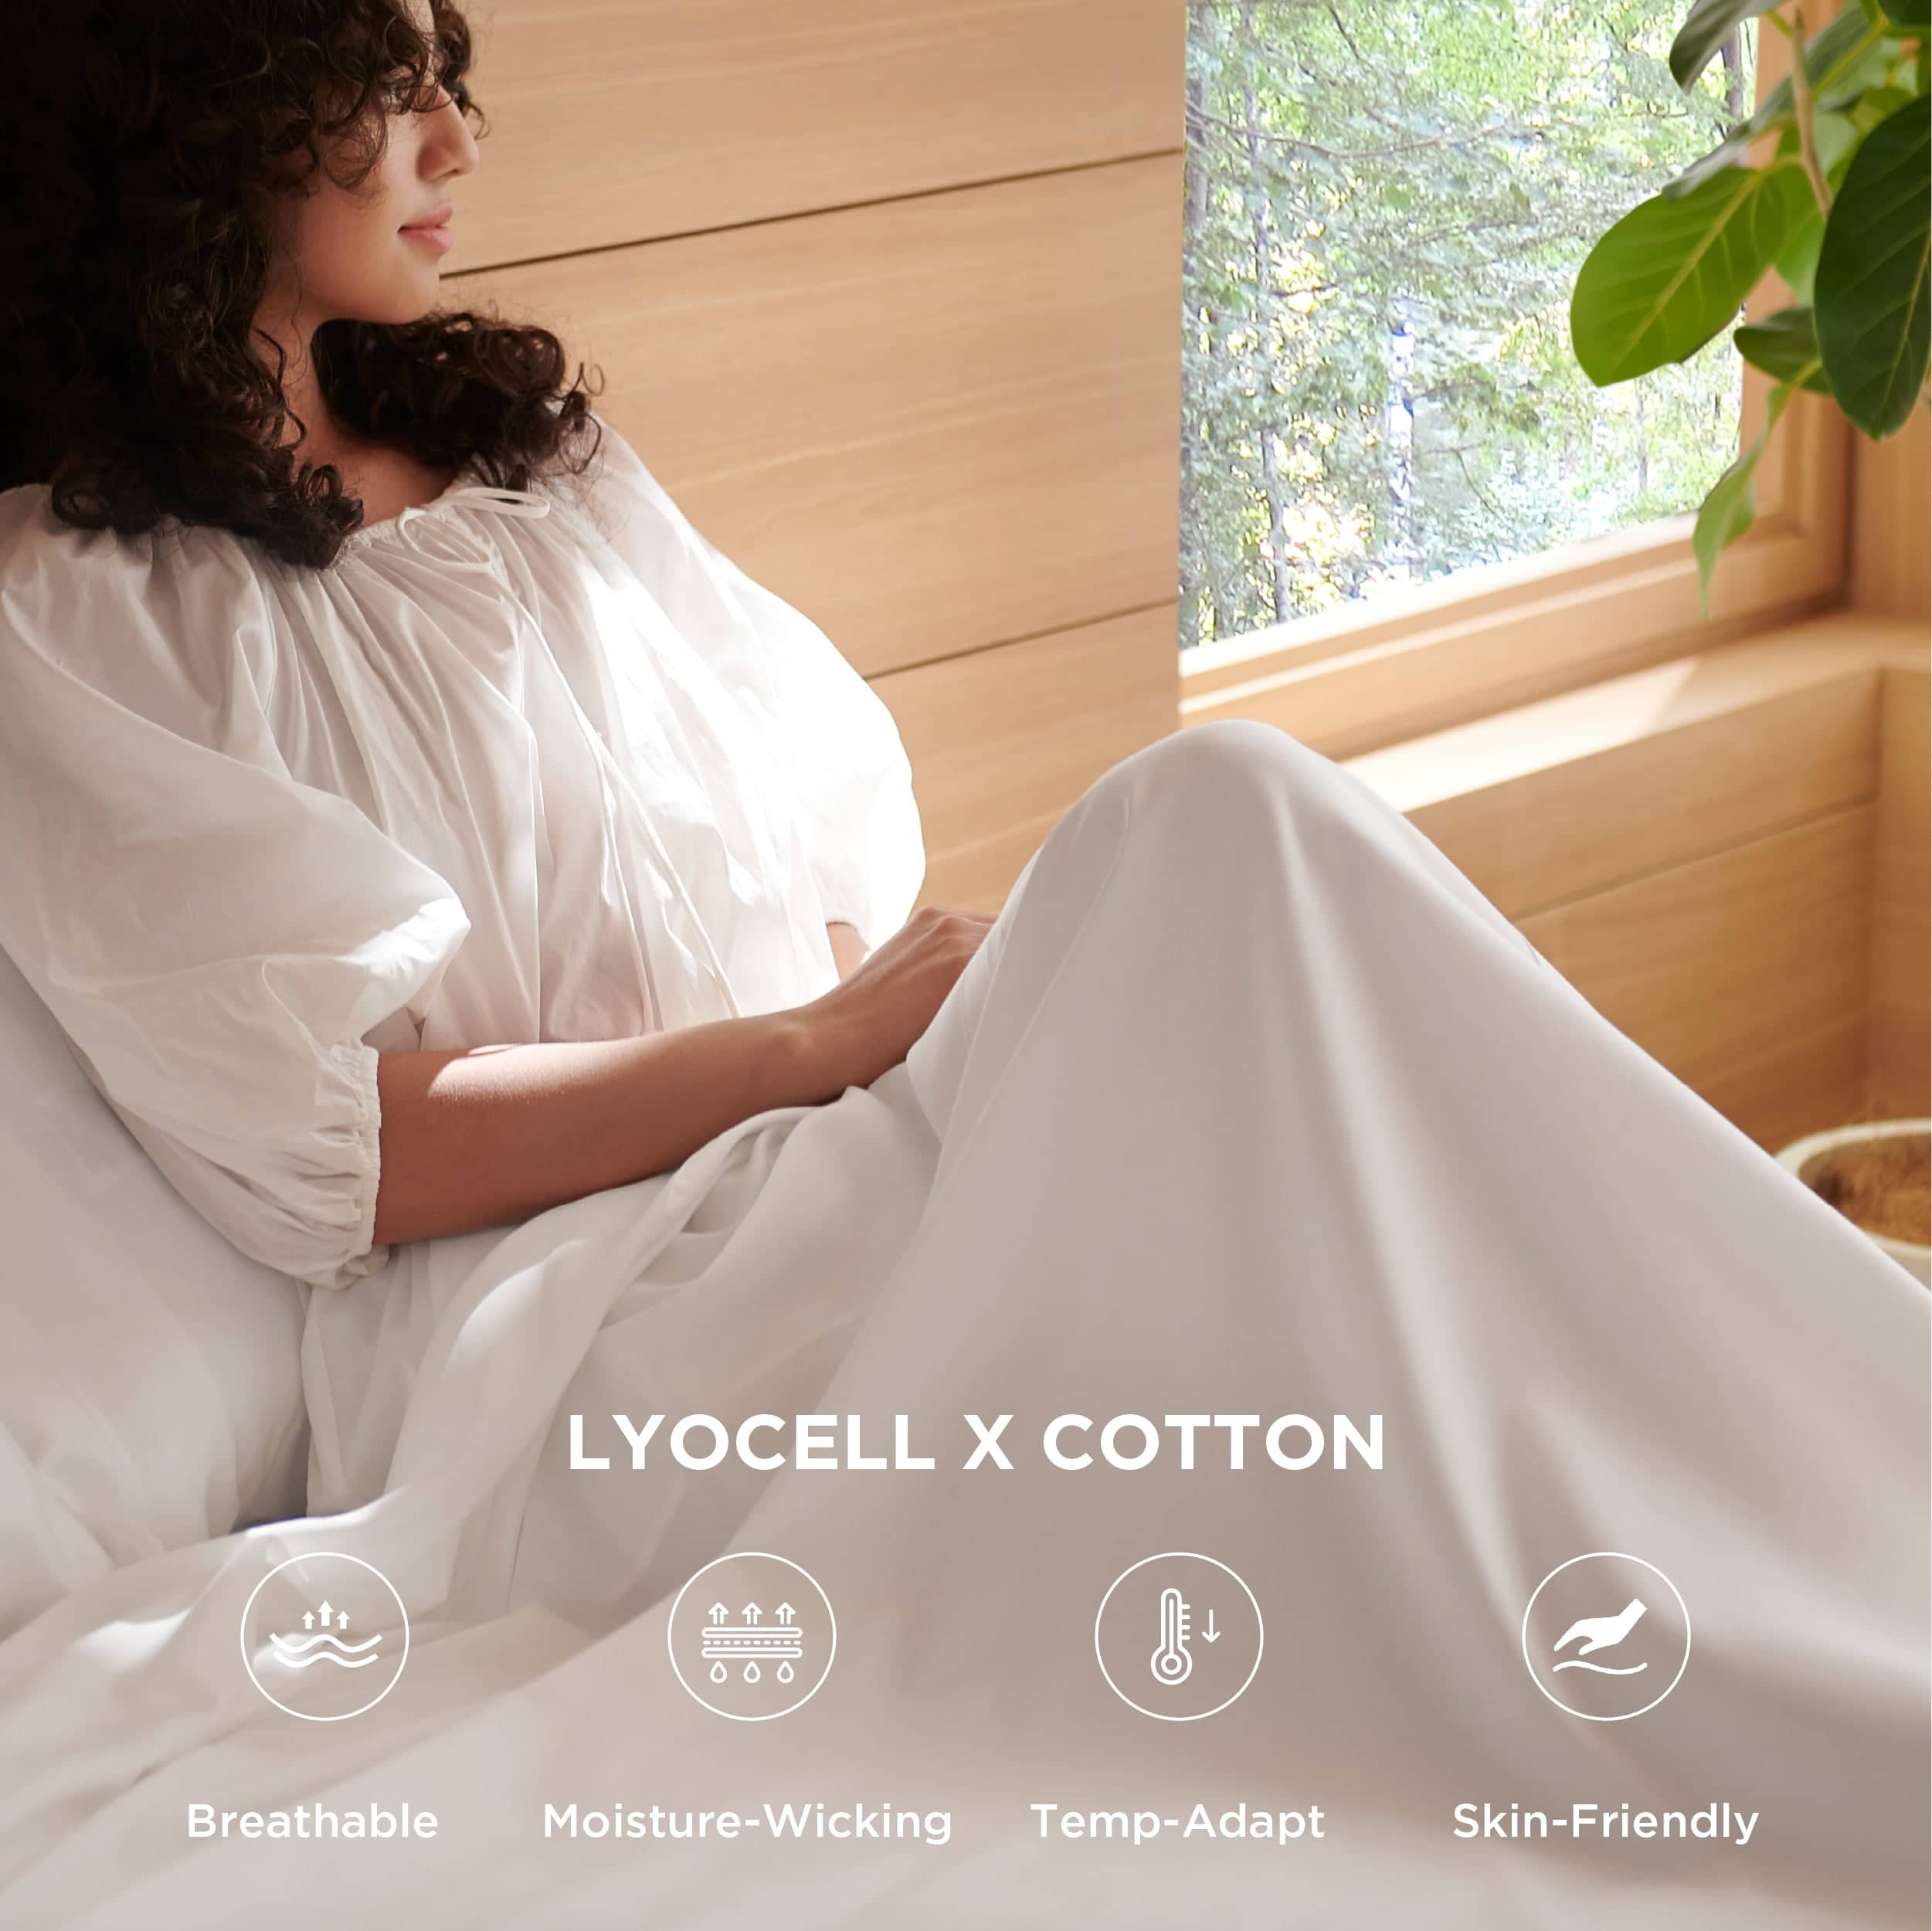 Bedsure Lyocell Cotton Sheet Set - Cooling Sheets